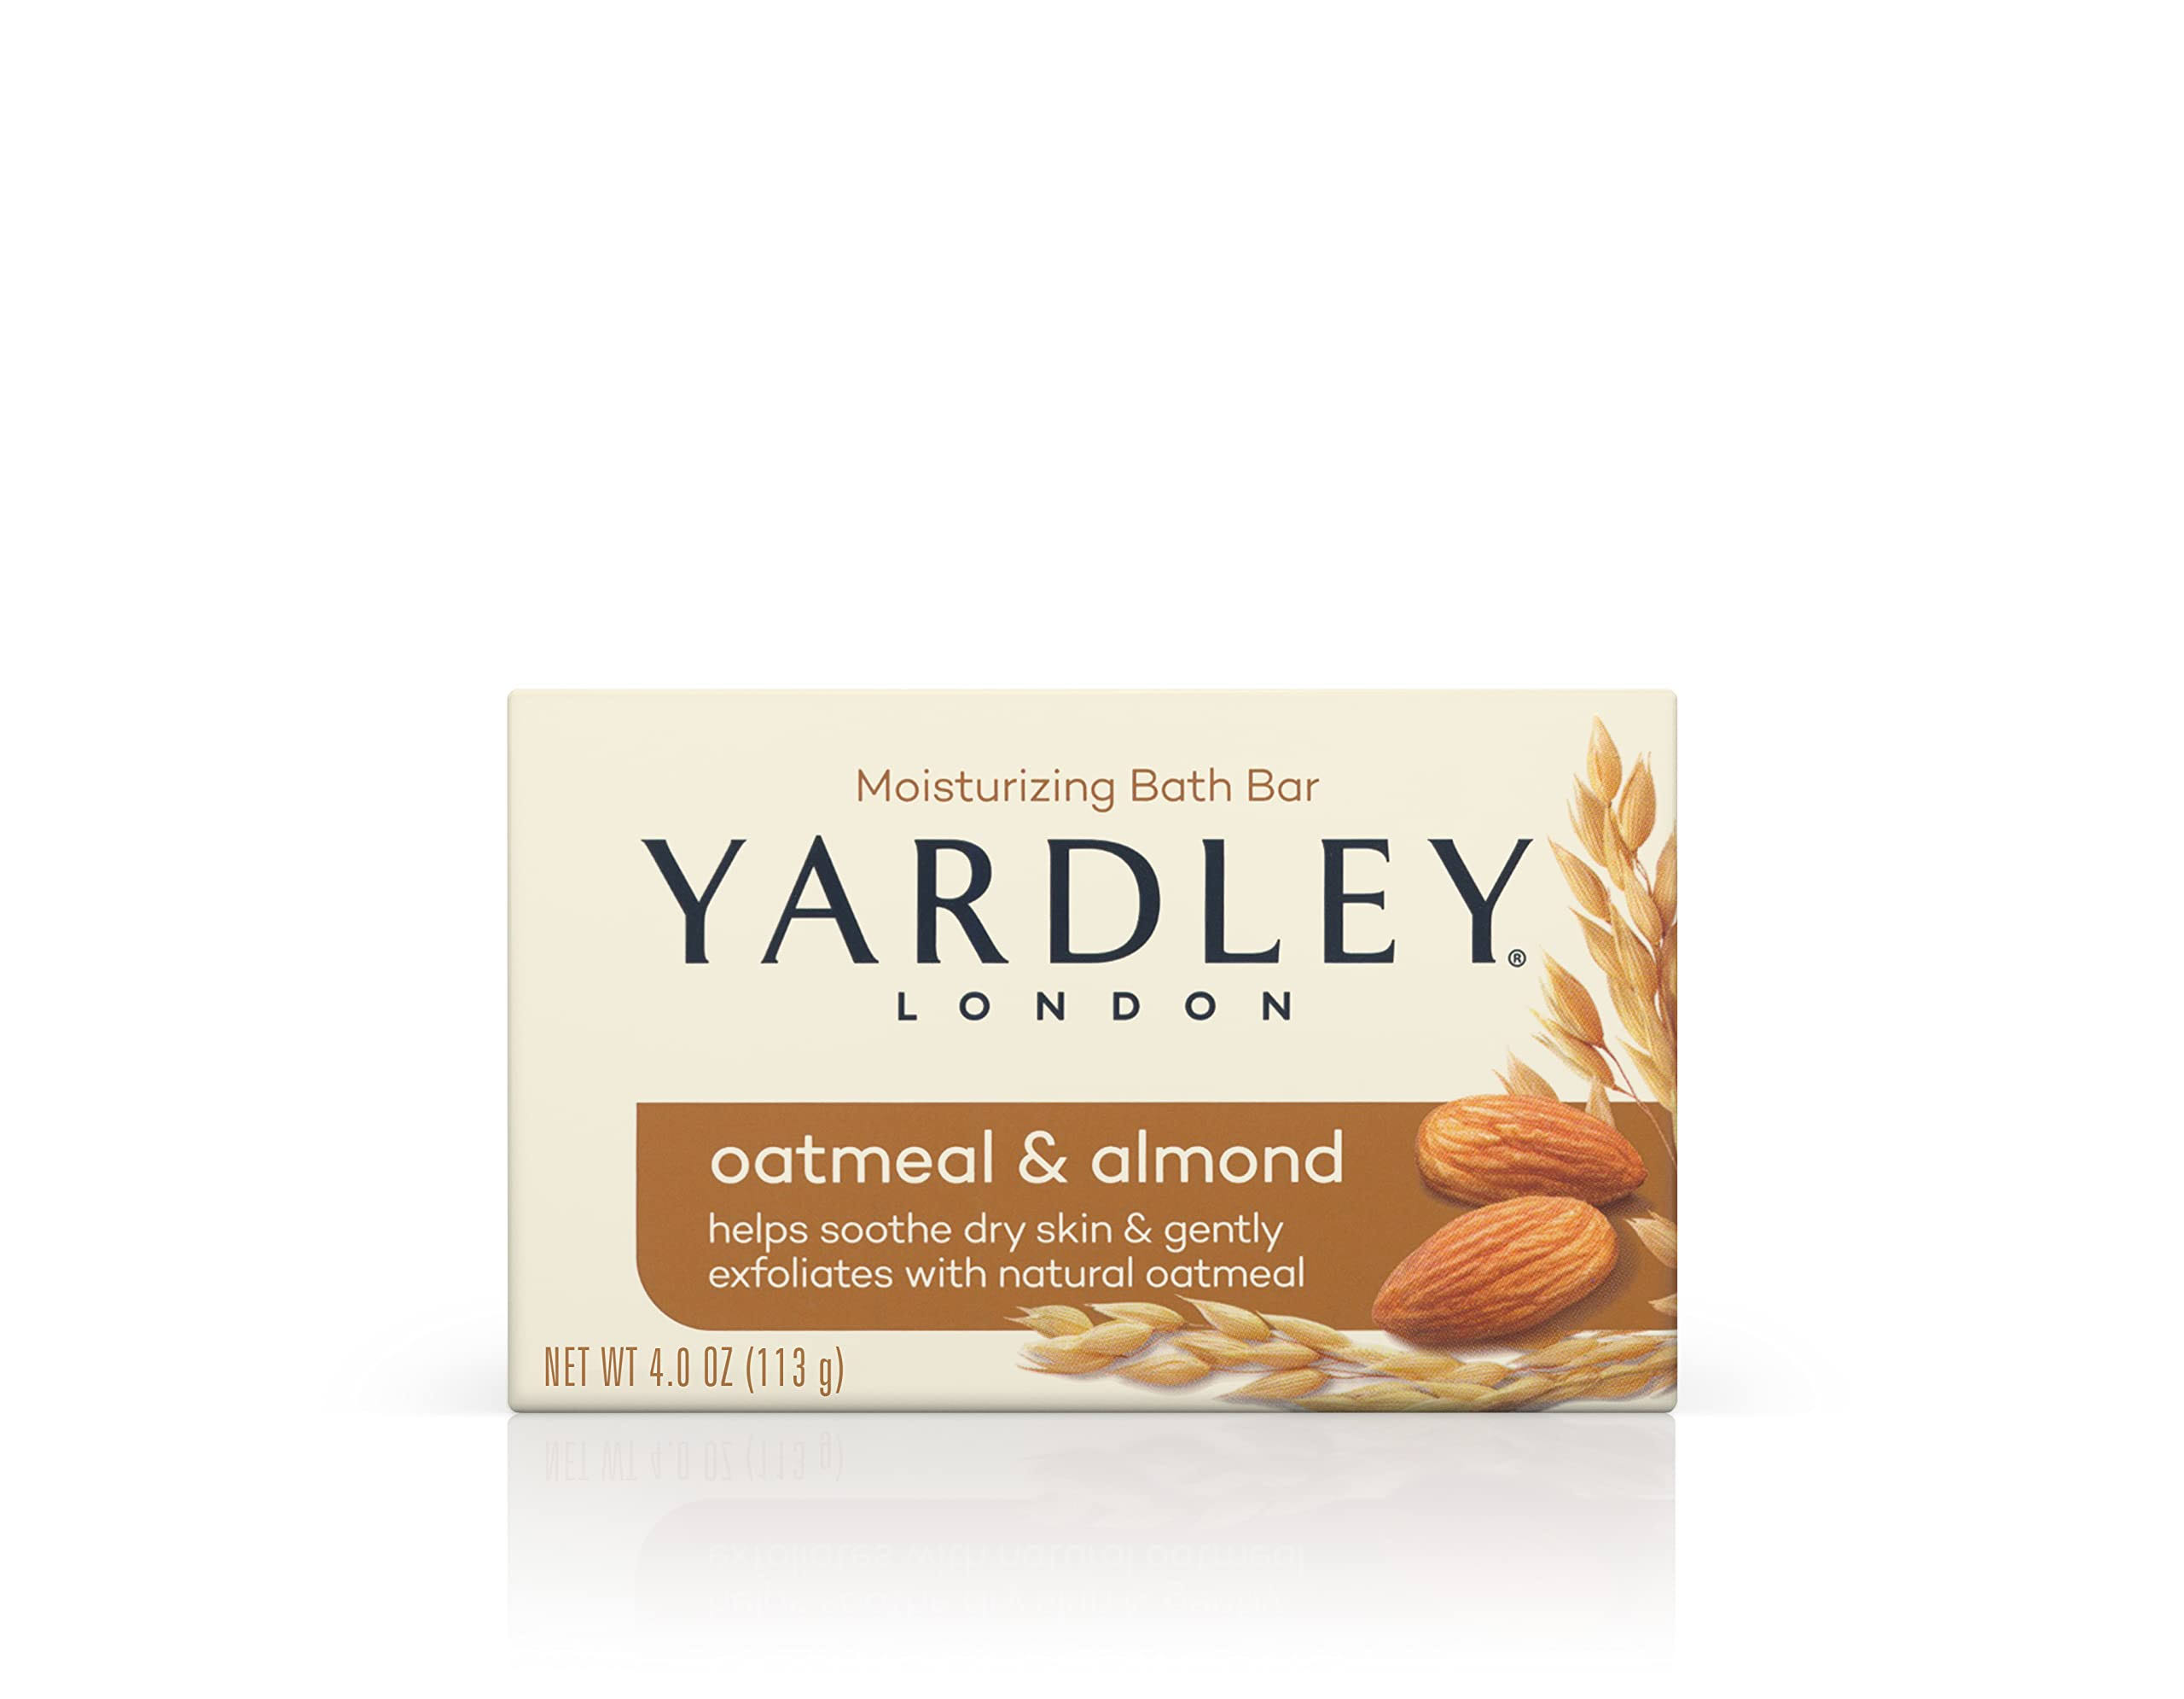 Yardley Naturally Moisturizing Bath Bar - 4.25oz, Oatmeal and Almond